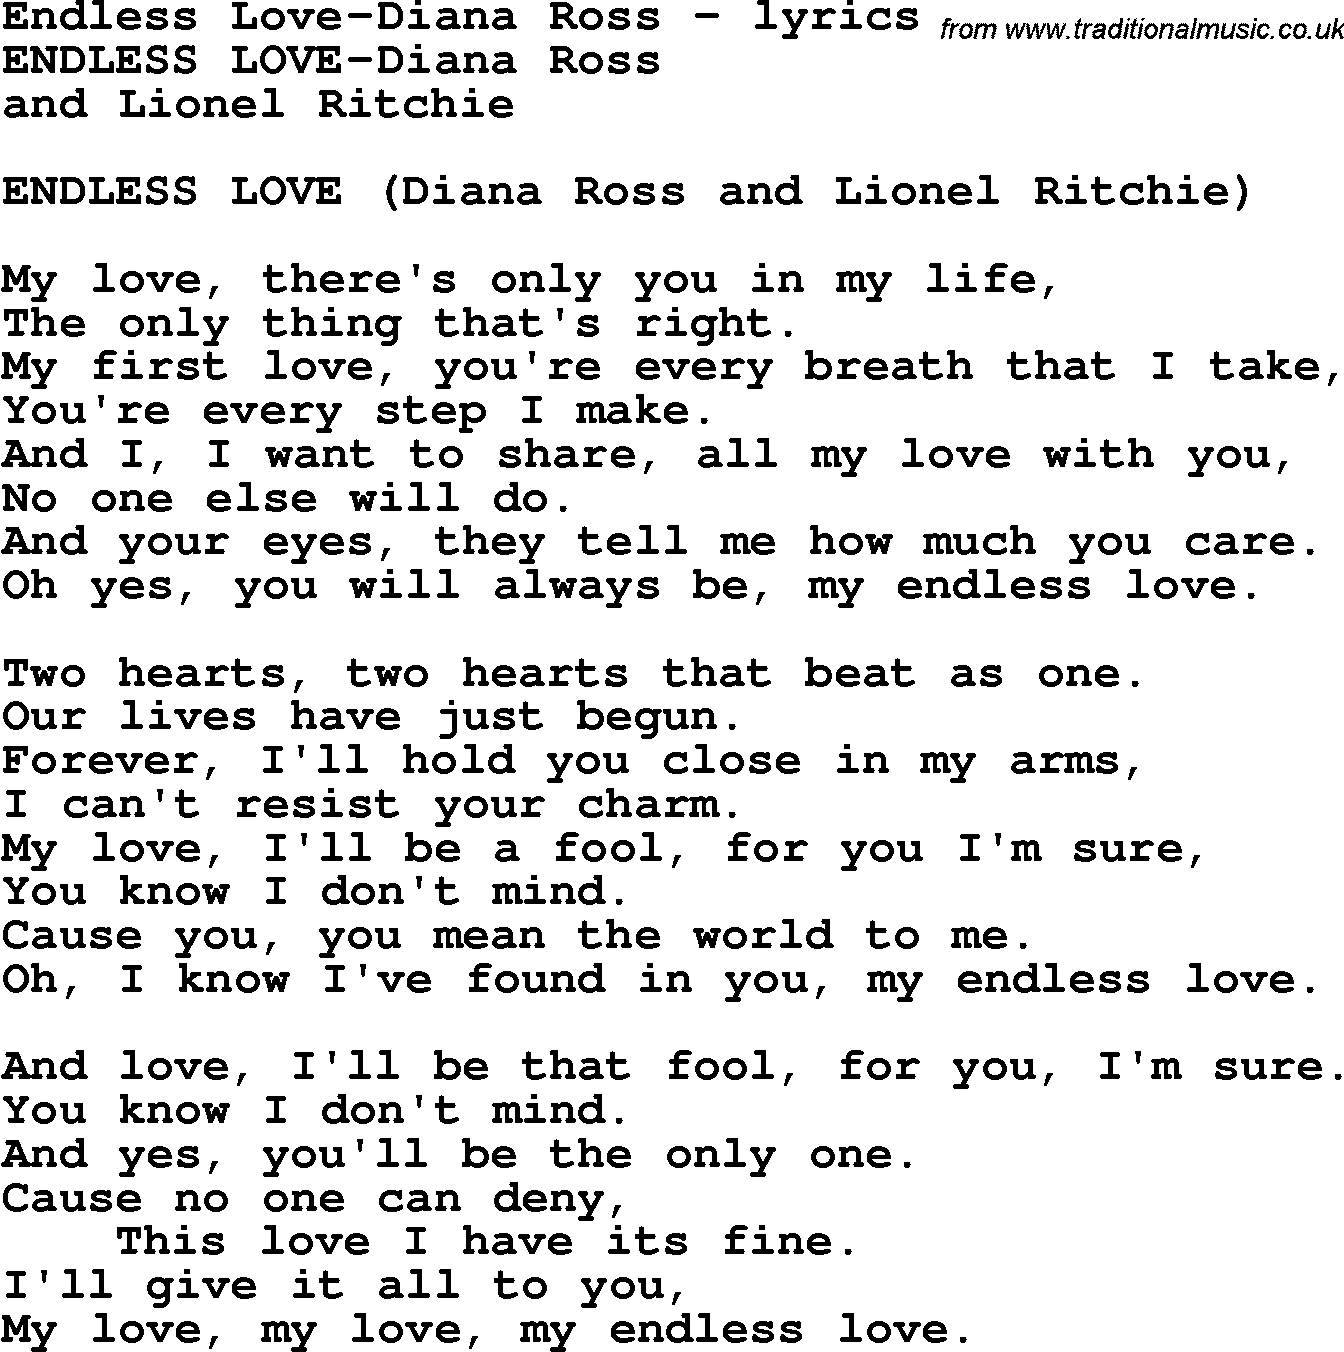 Love Song Lyrics for: Endless Love-Diana Ross